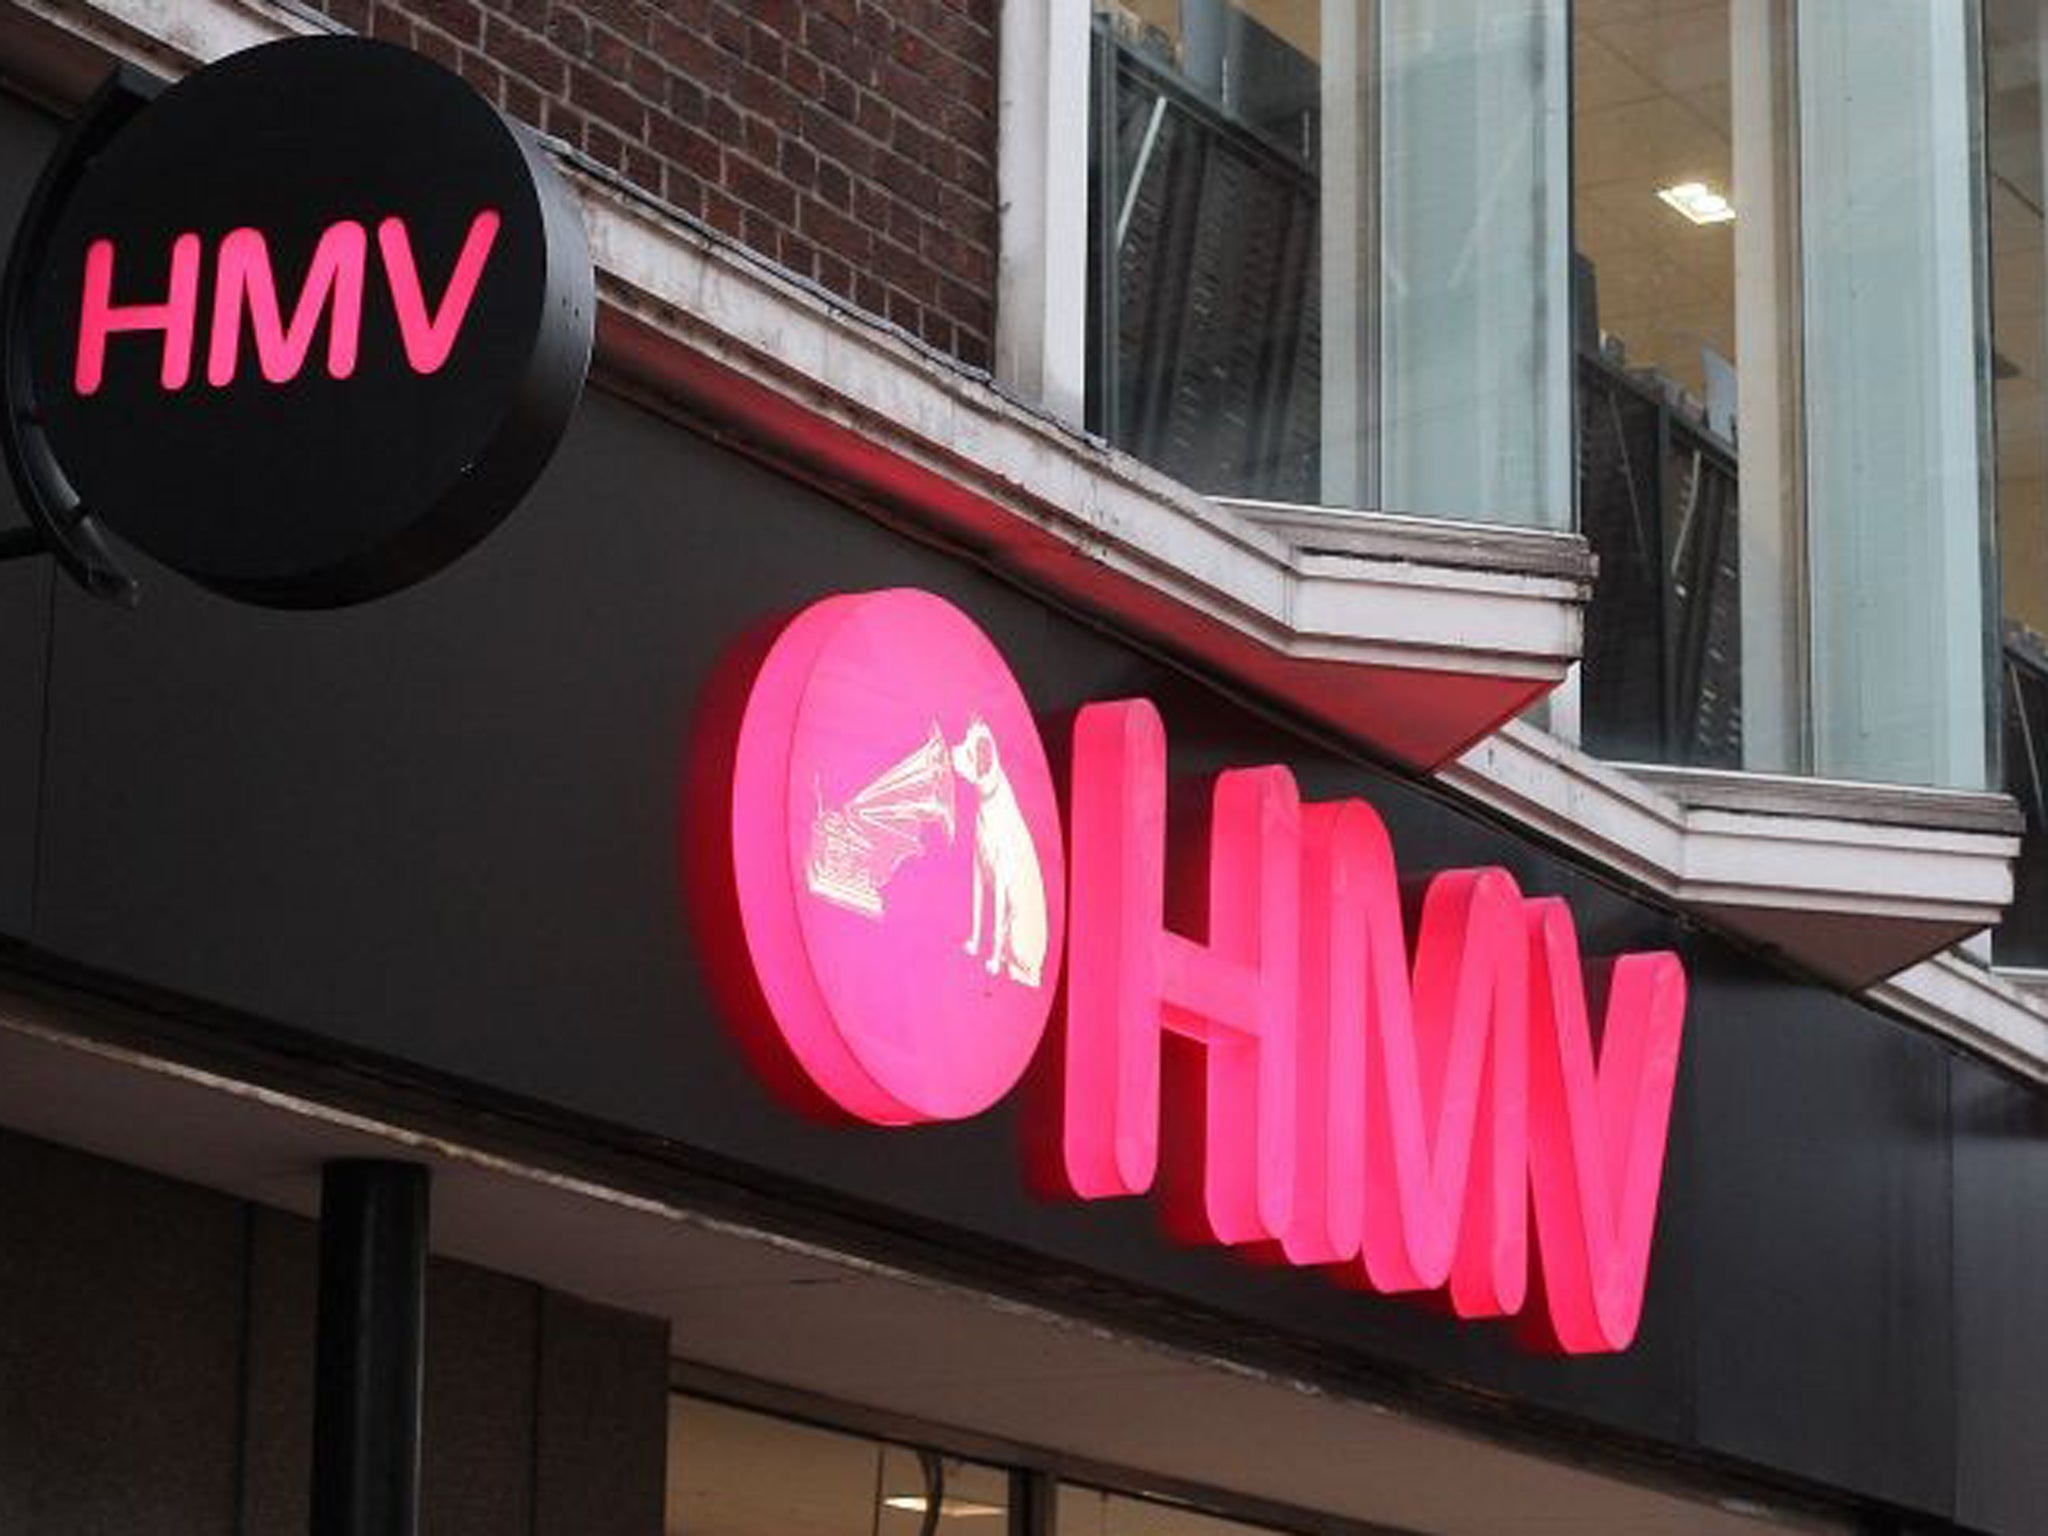 HMV has announced it will close 66 stores